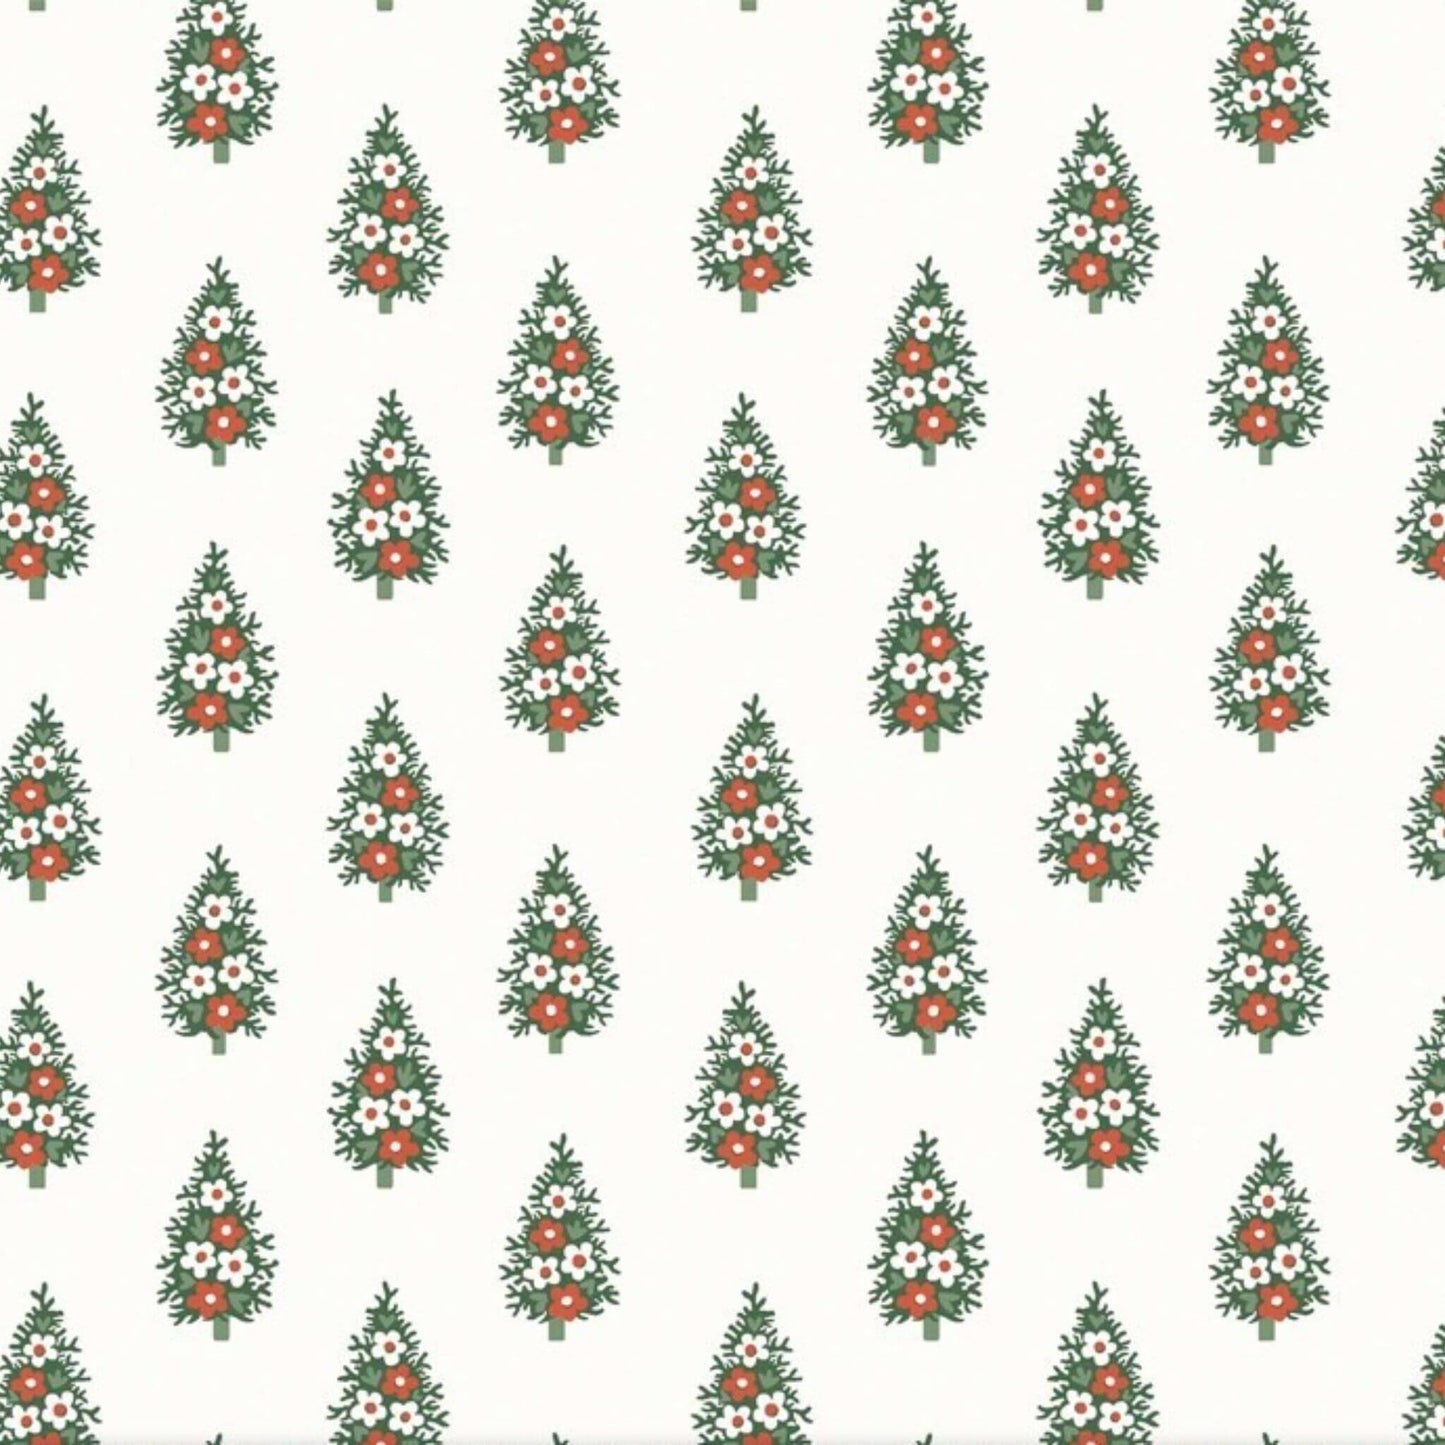 Winter Pine - A Woodland Christmas Fabric Range - Liberty Fabrics - Warm